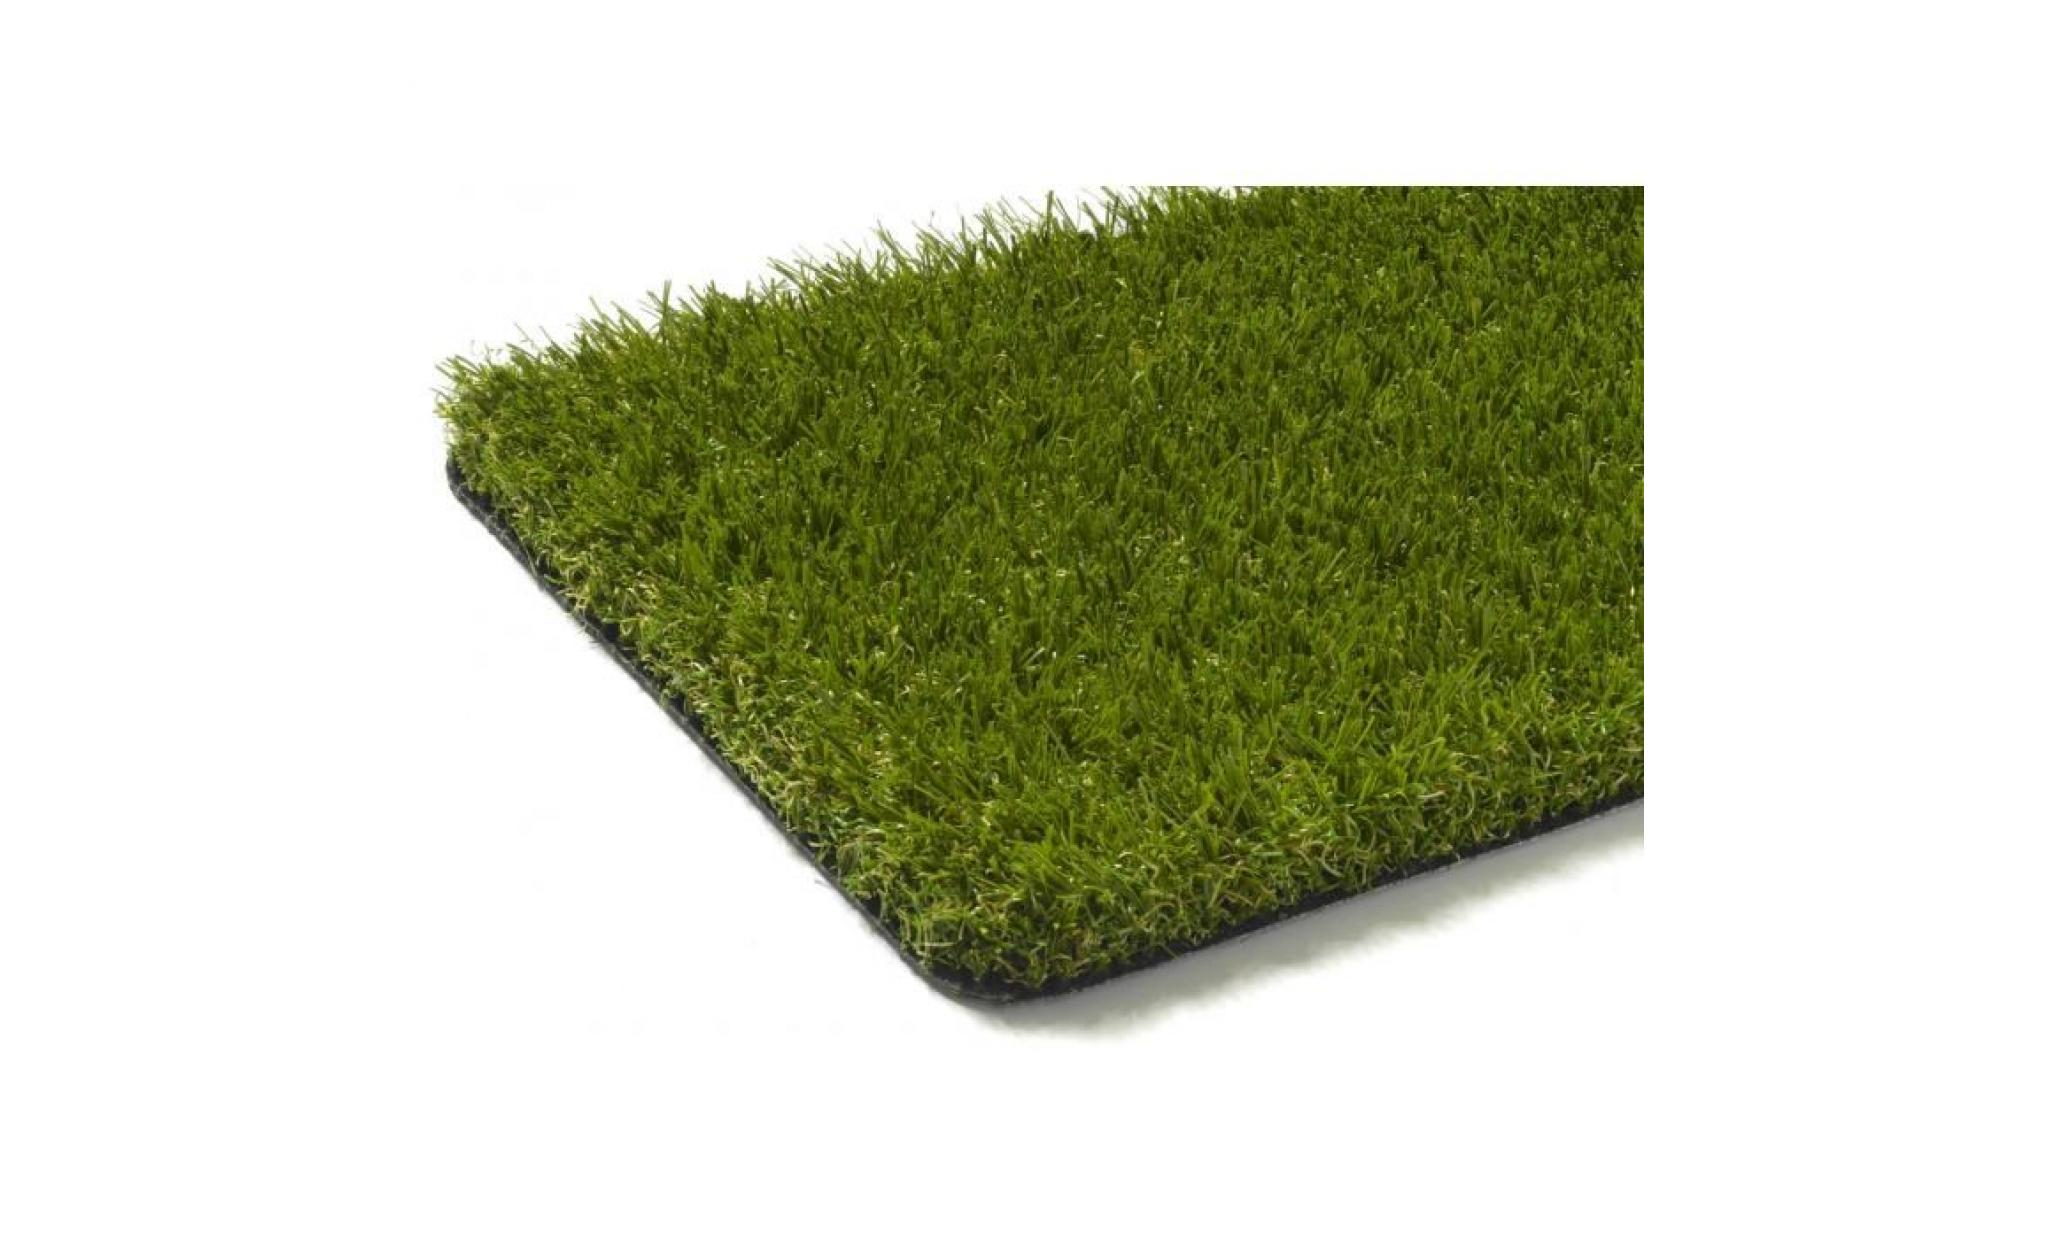 oxford   tapis type luxe gazon artificiel – pour jardin, terrasse, balcon   vert  [200x450 cm]